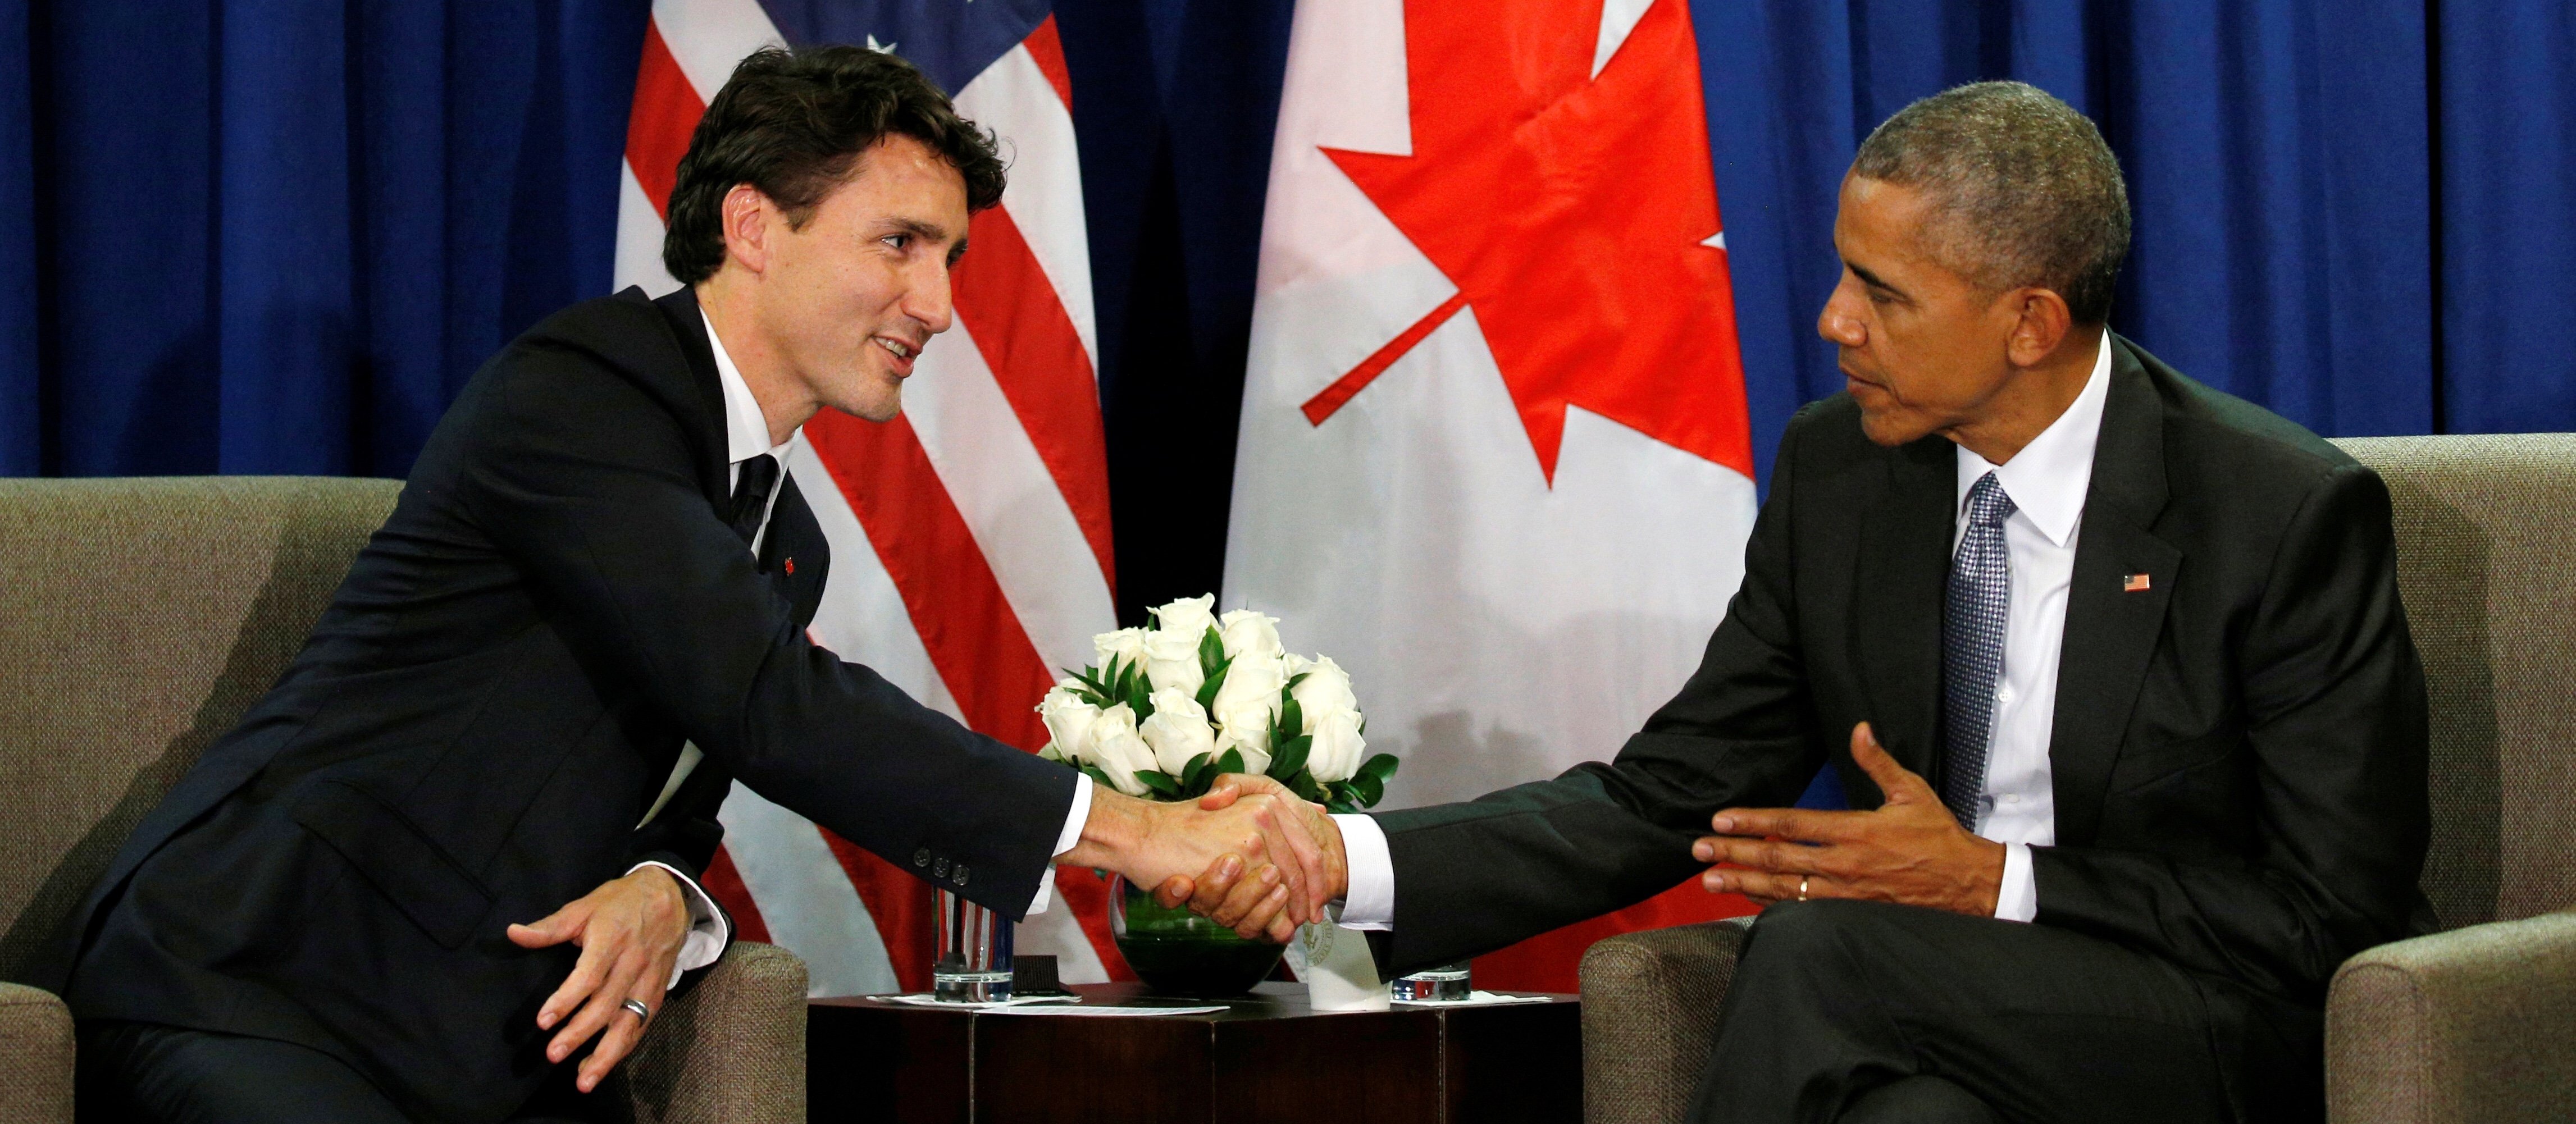 U.S. President Barack Obama meets Canadian Prime Minister Justin Trudeau at the APEC Summit in Lima, Peru November 20, 2016. REUTERS/Kevin Lamarque